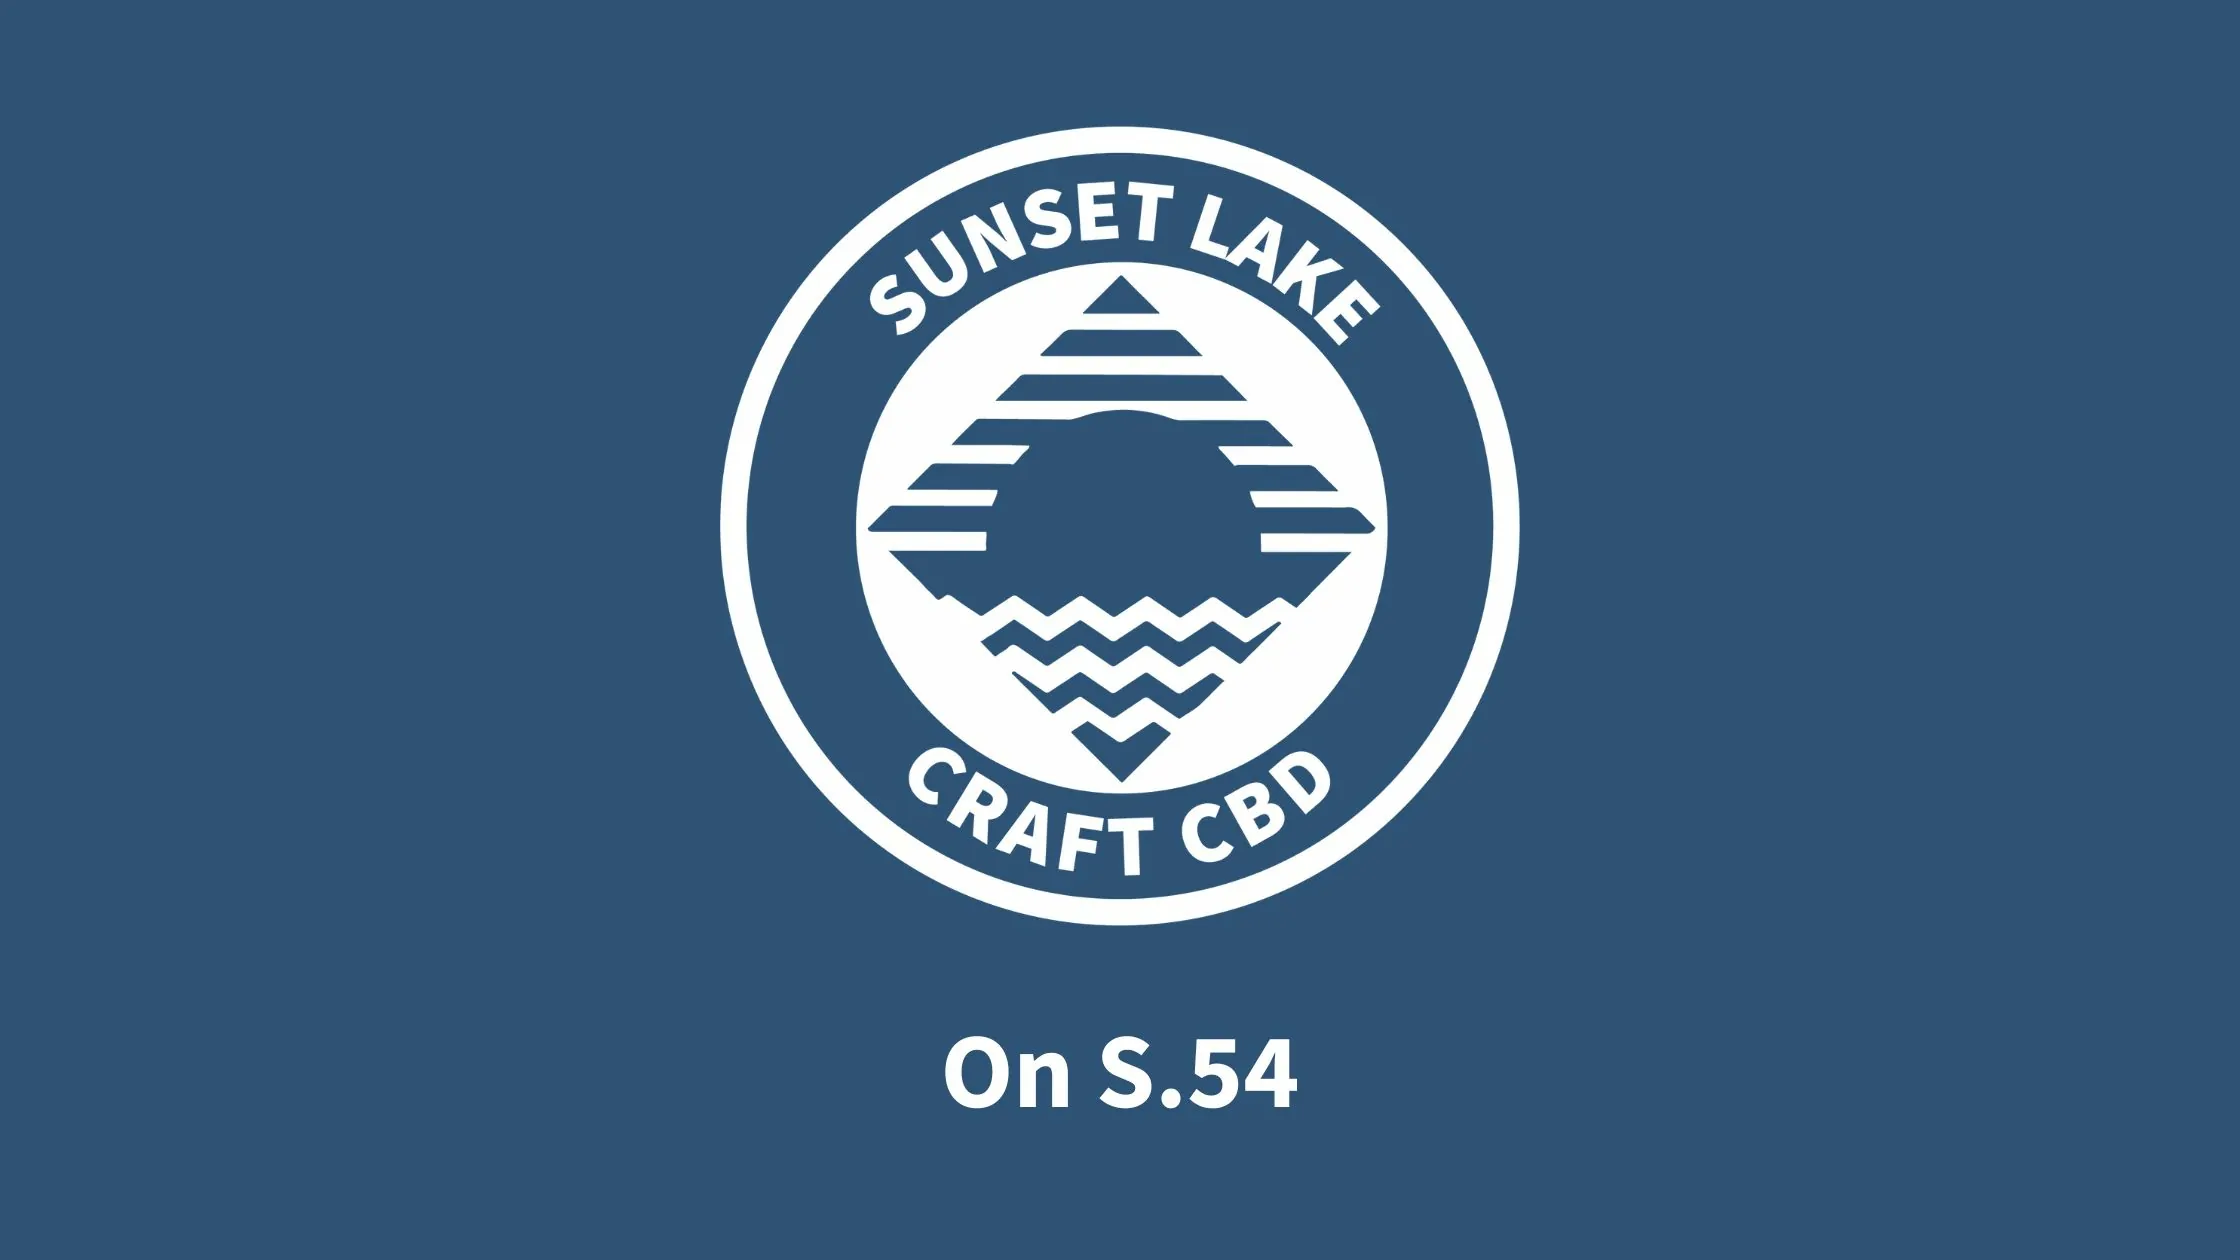 Sunset Lake On S.54